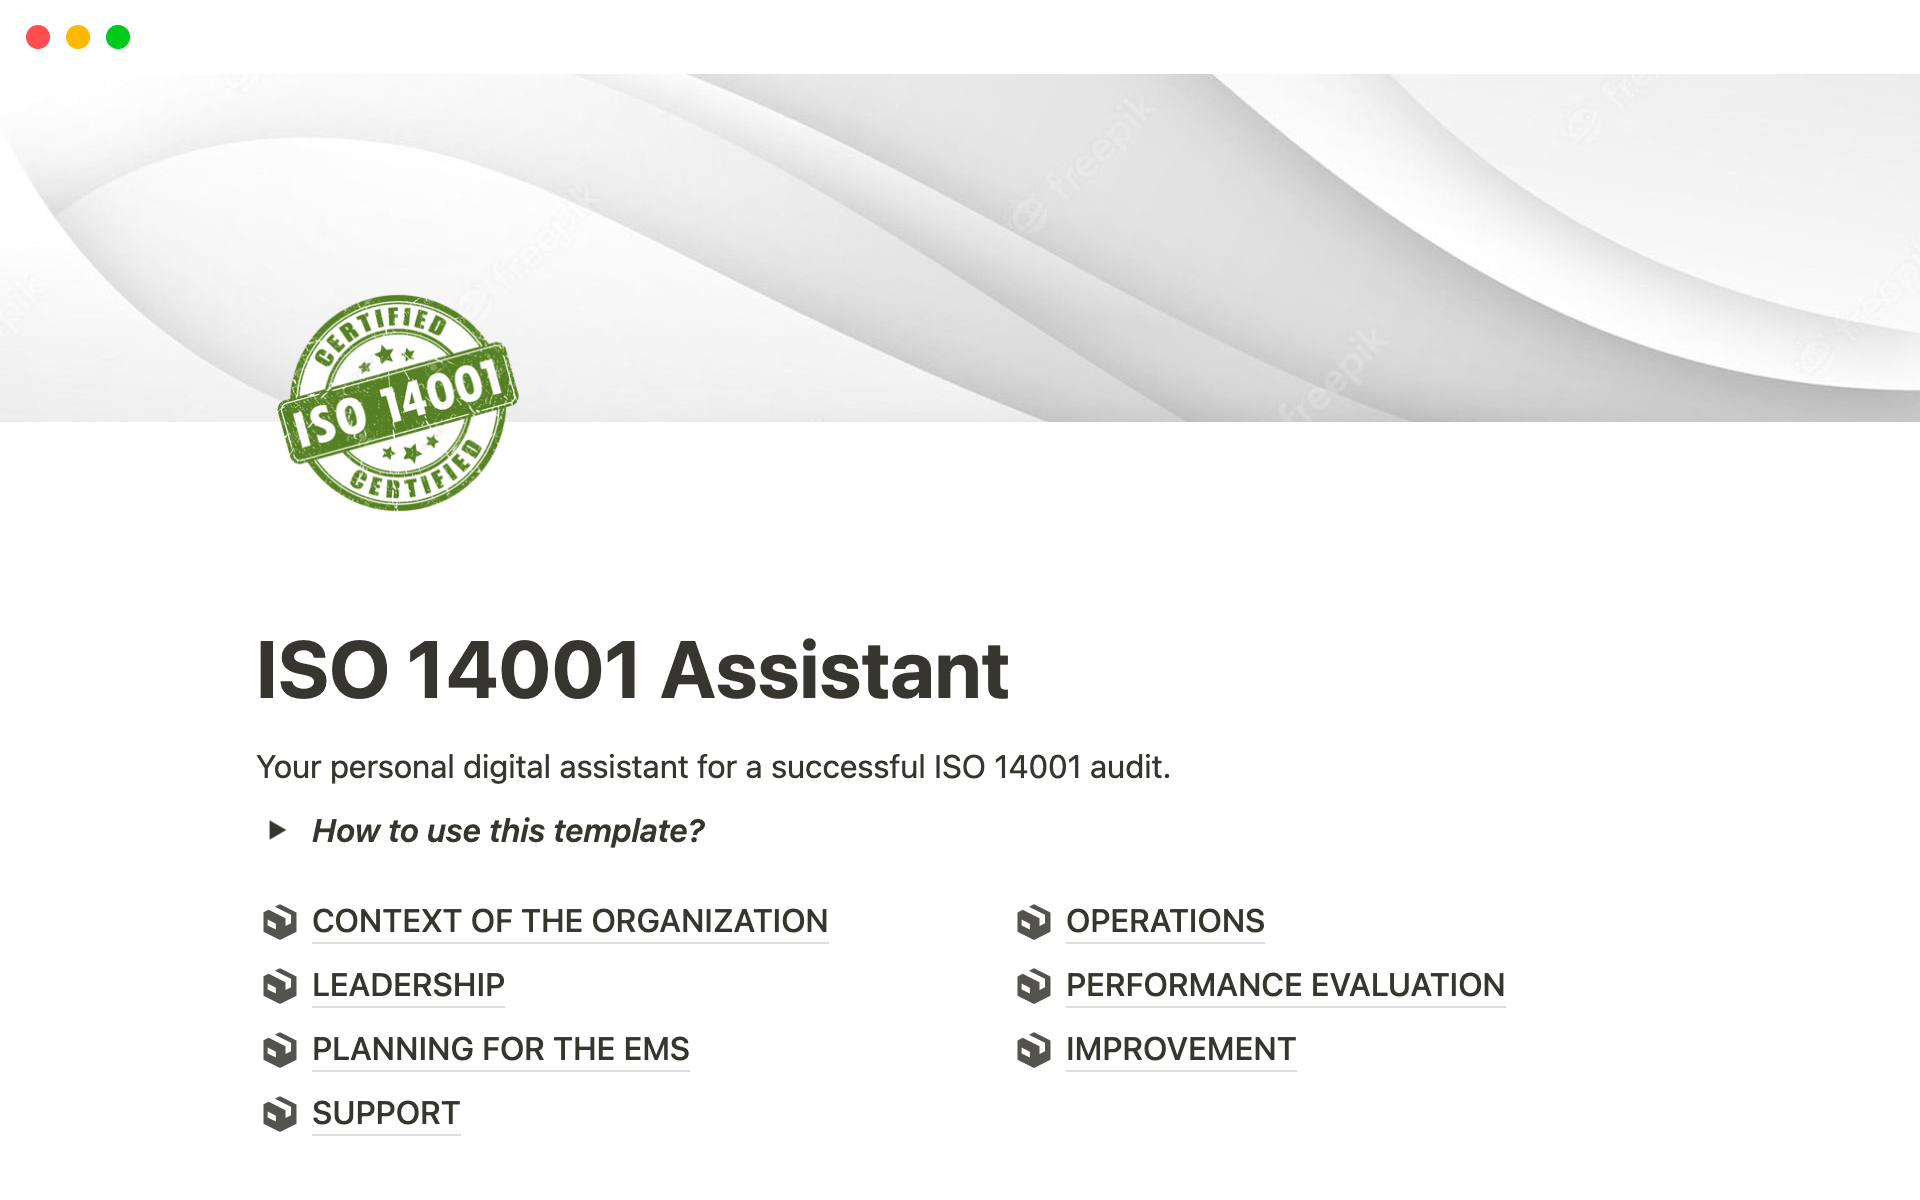 ISO 14001 ASSISTANT님의 템플릿 미리보기